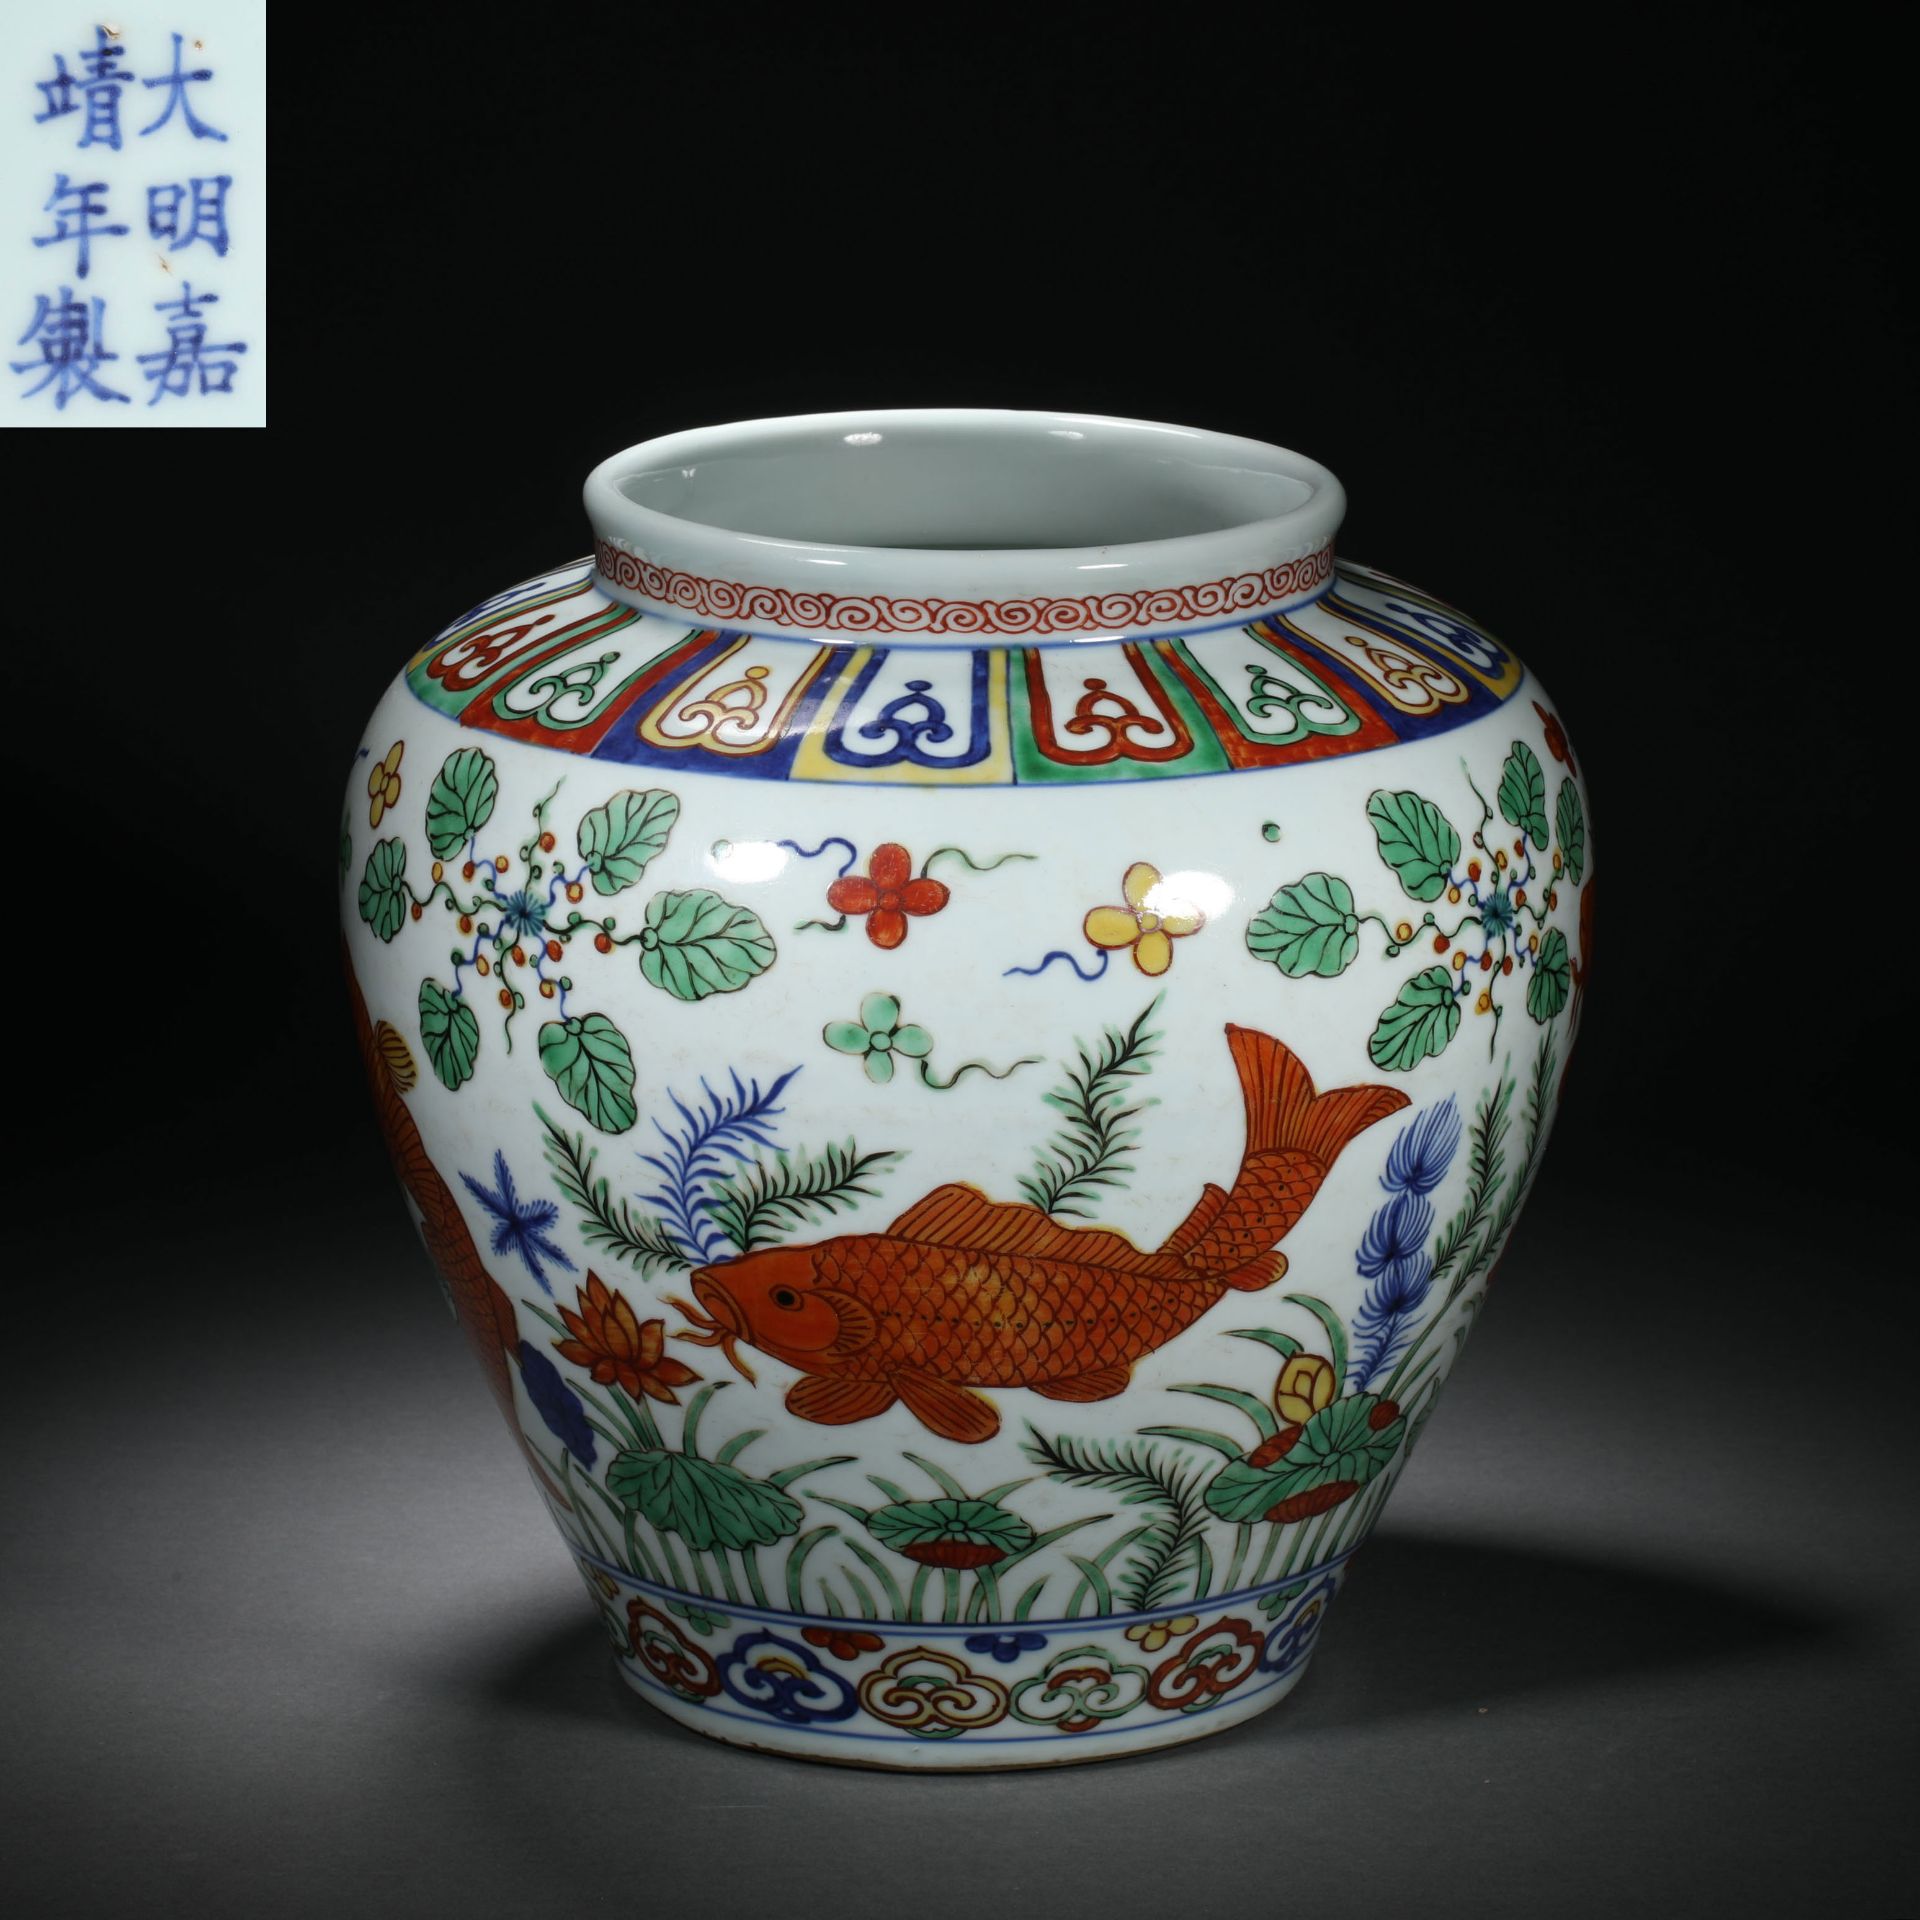 Ming dynasty multicolored fish algae pattern large jar